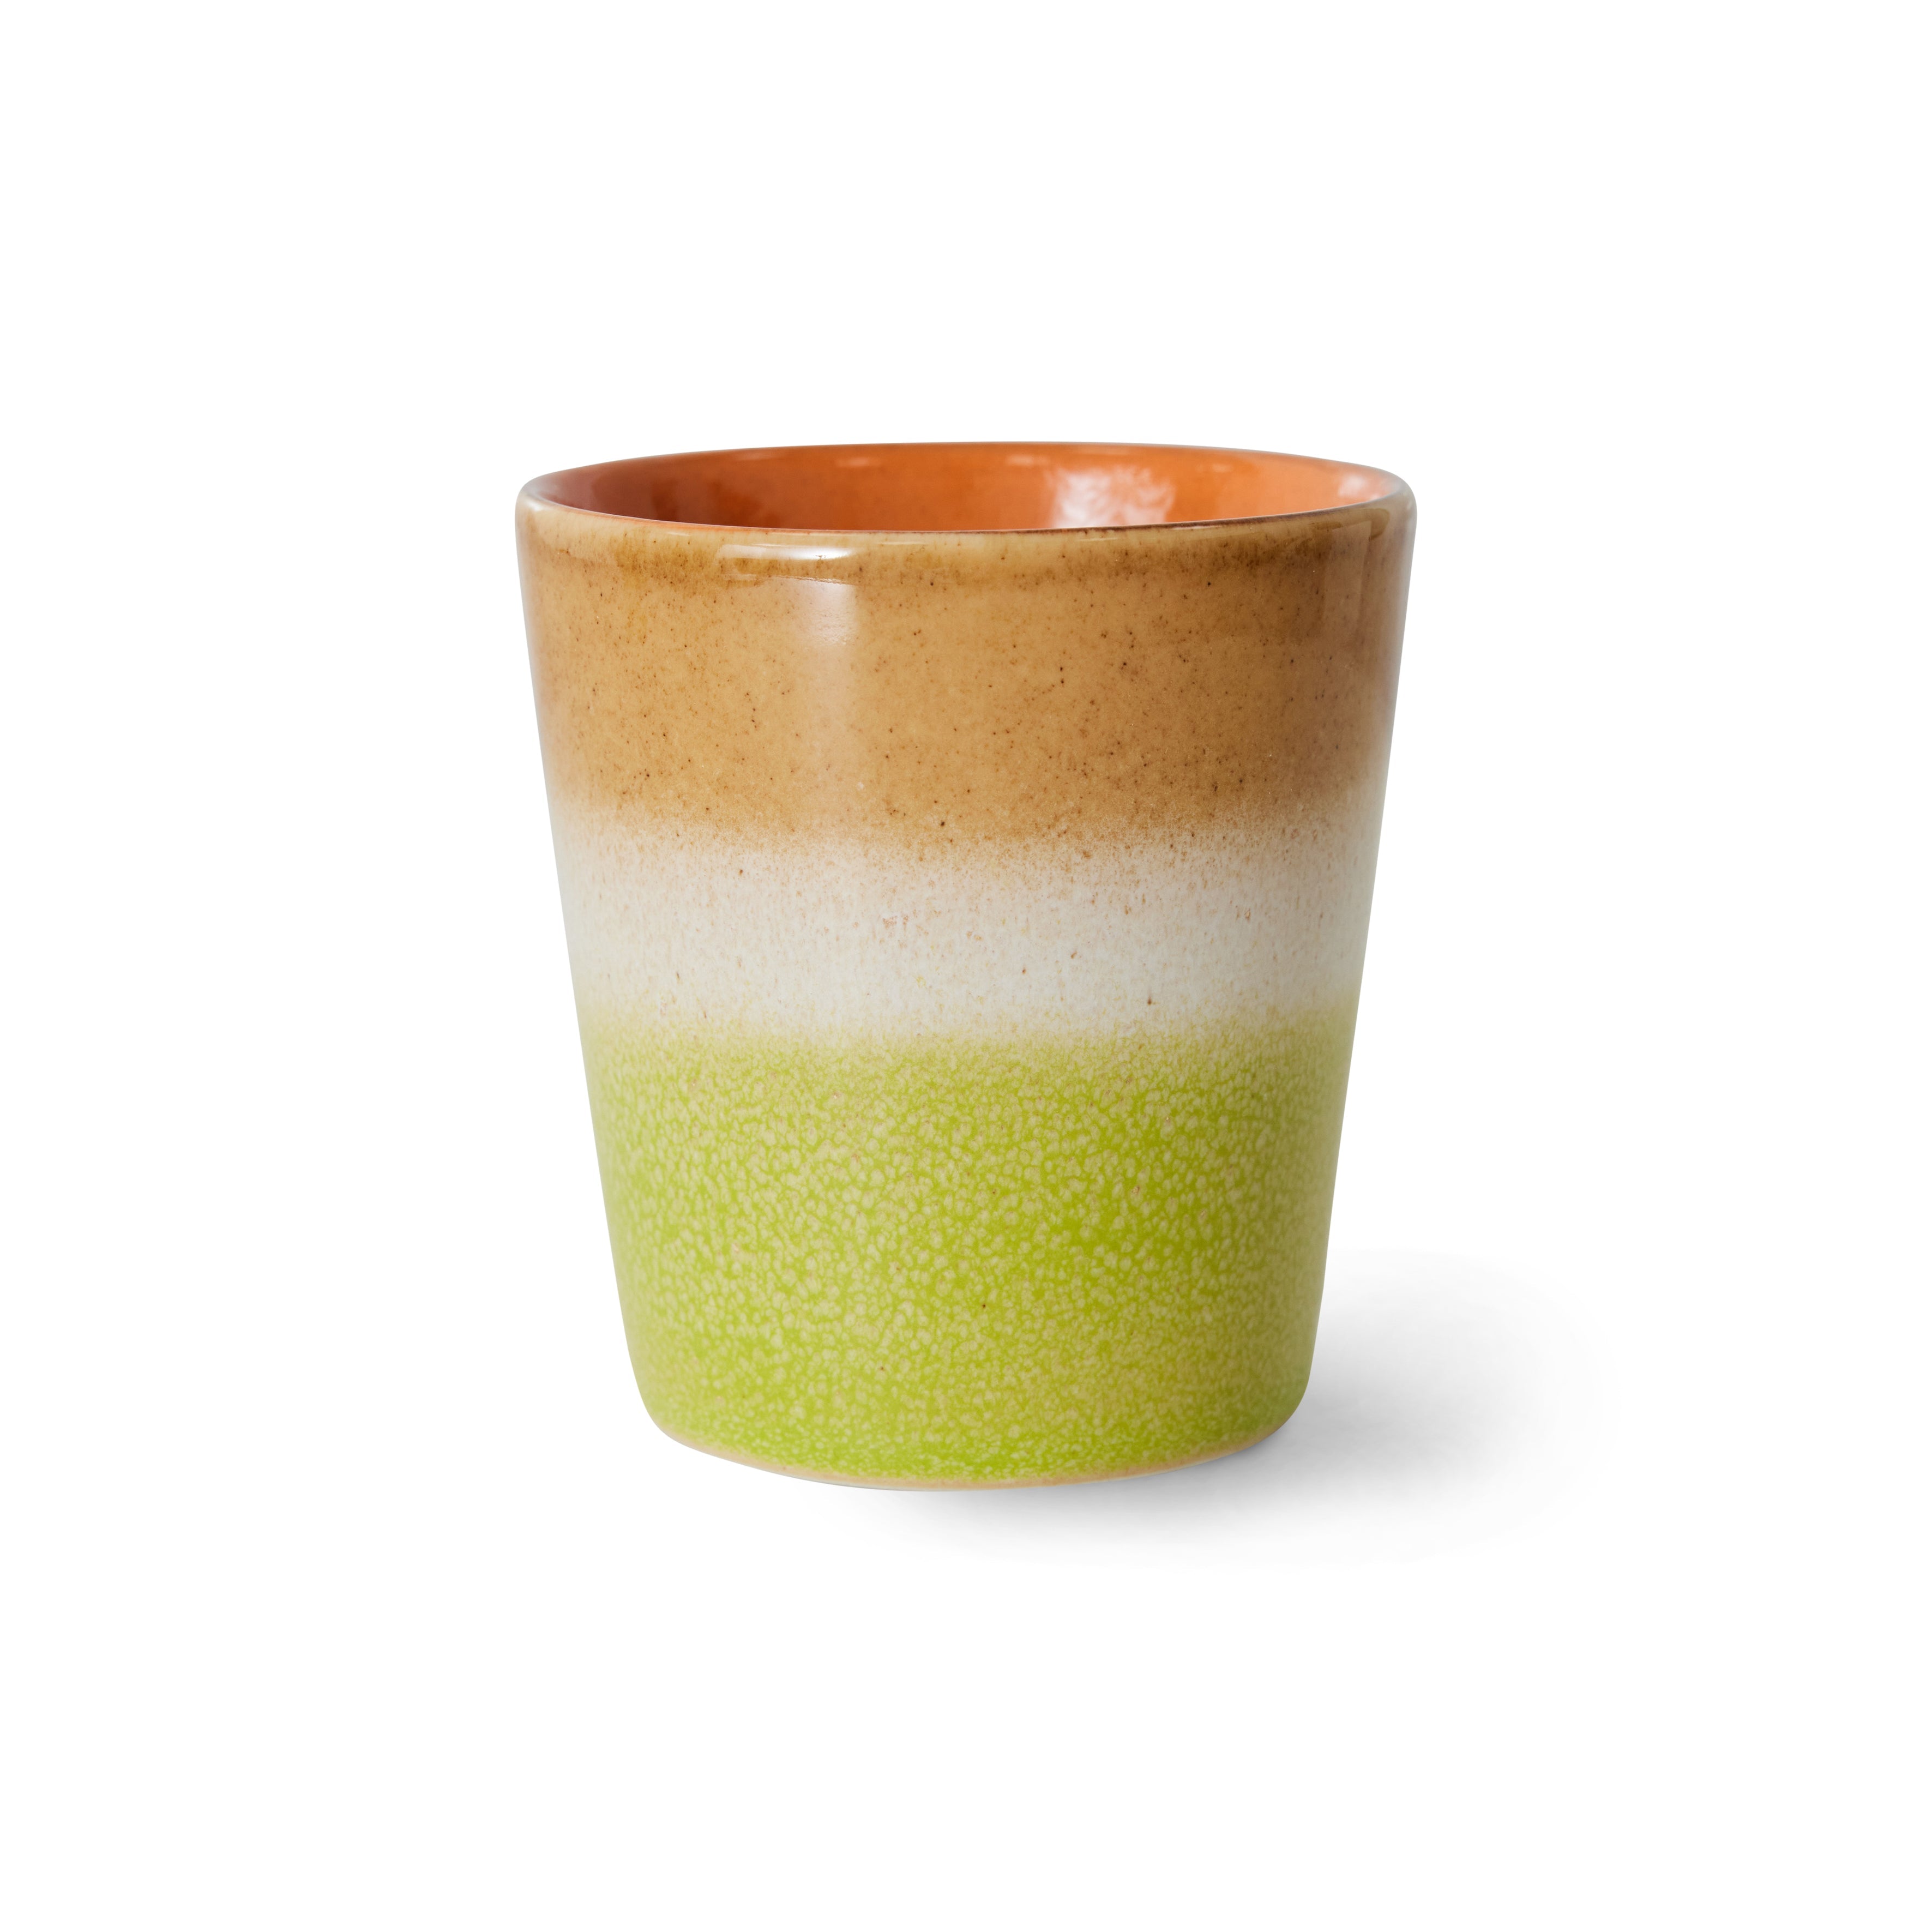 70s ceramics: coffee mug, eclipse